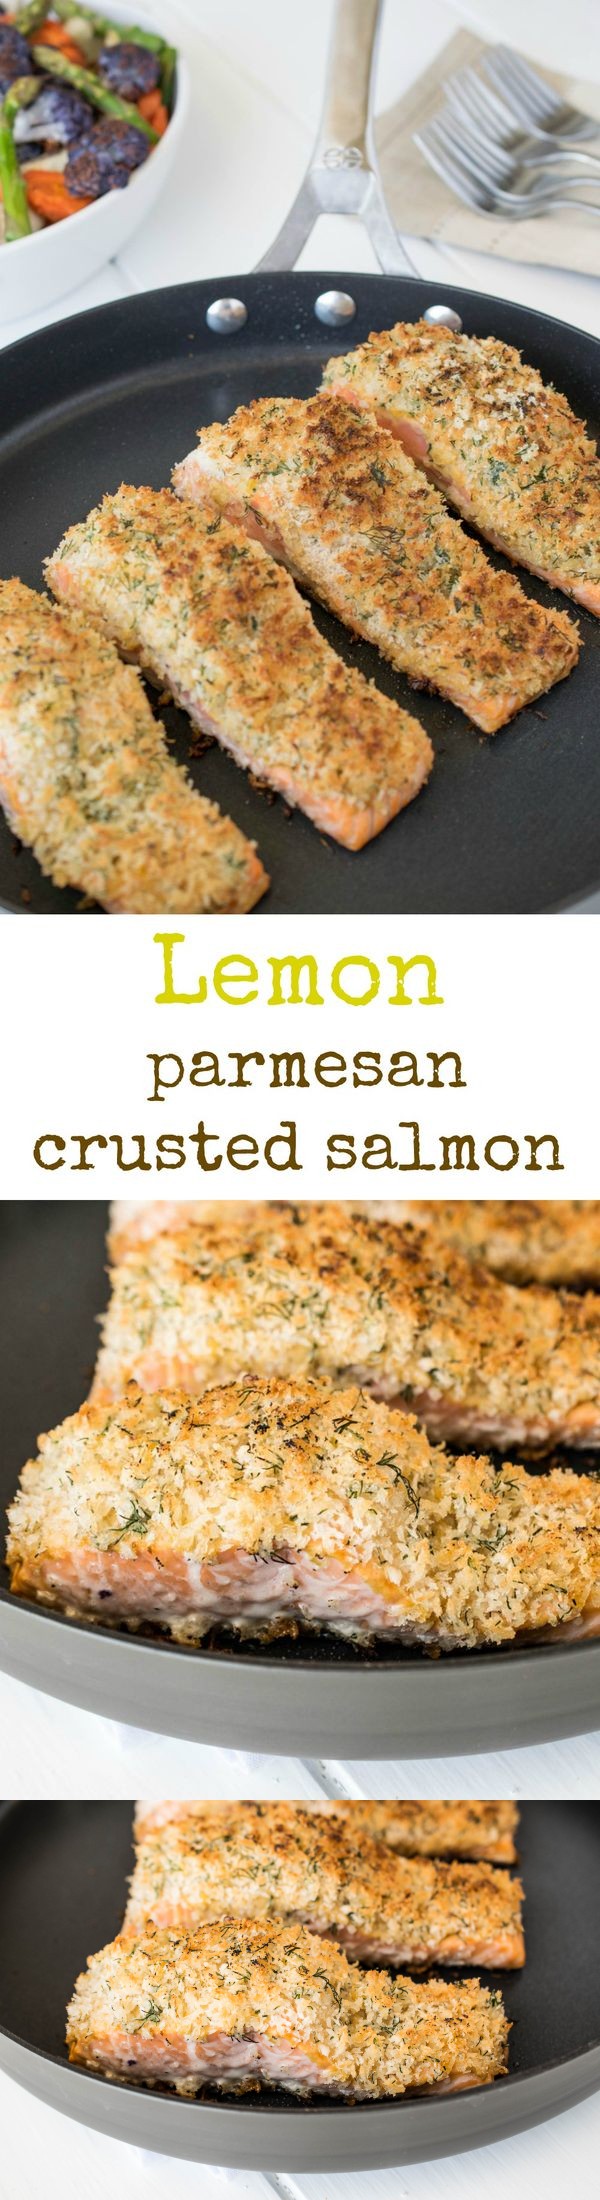 Lemon parmesan crusted salmon